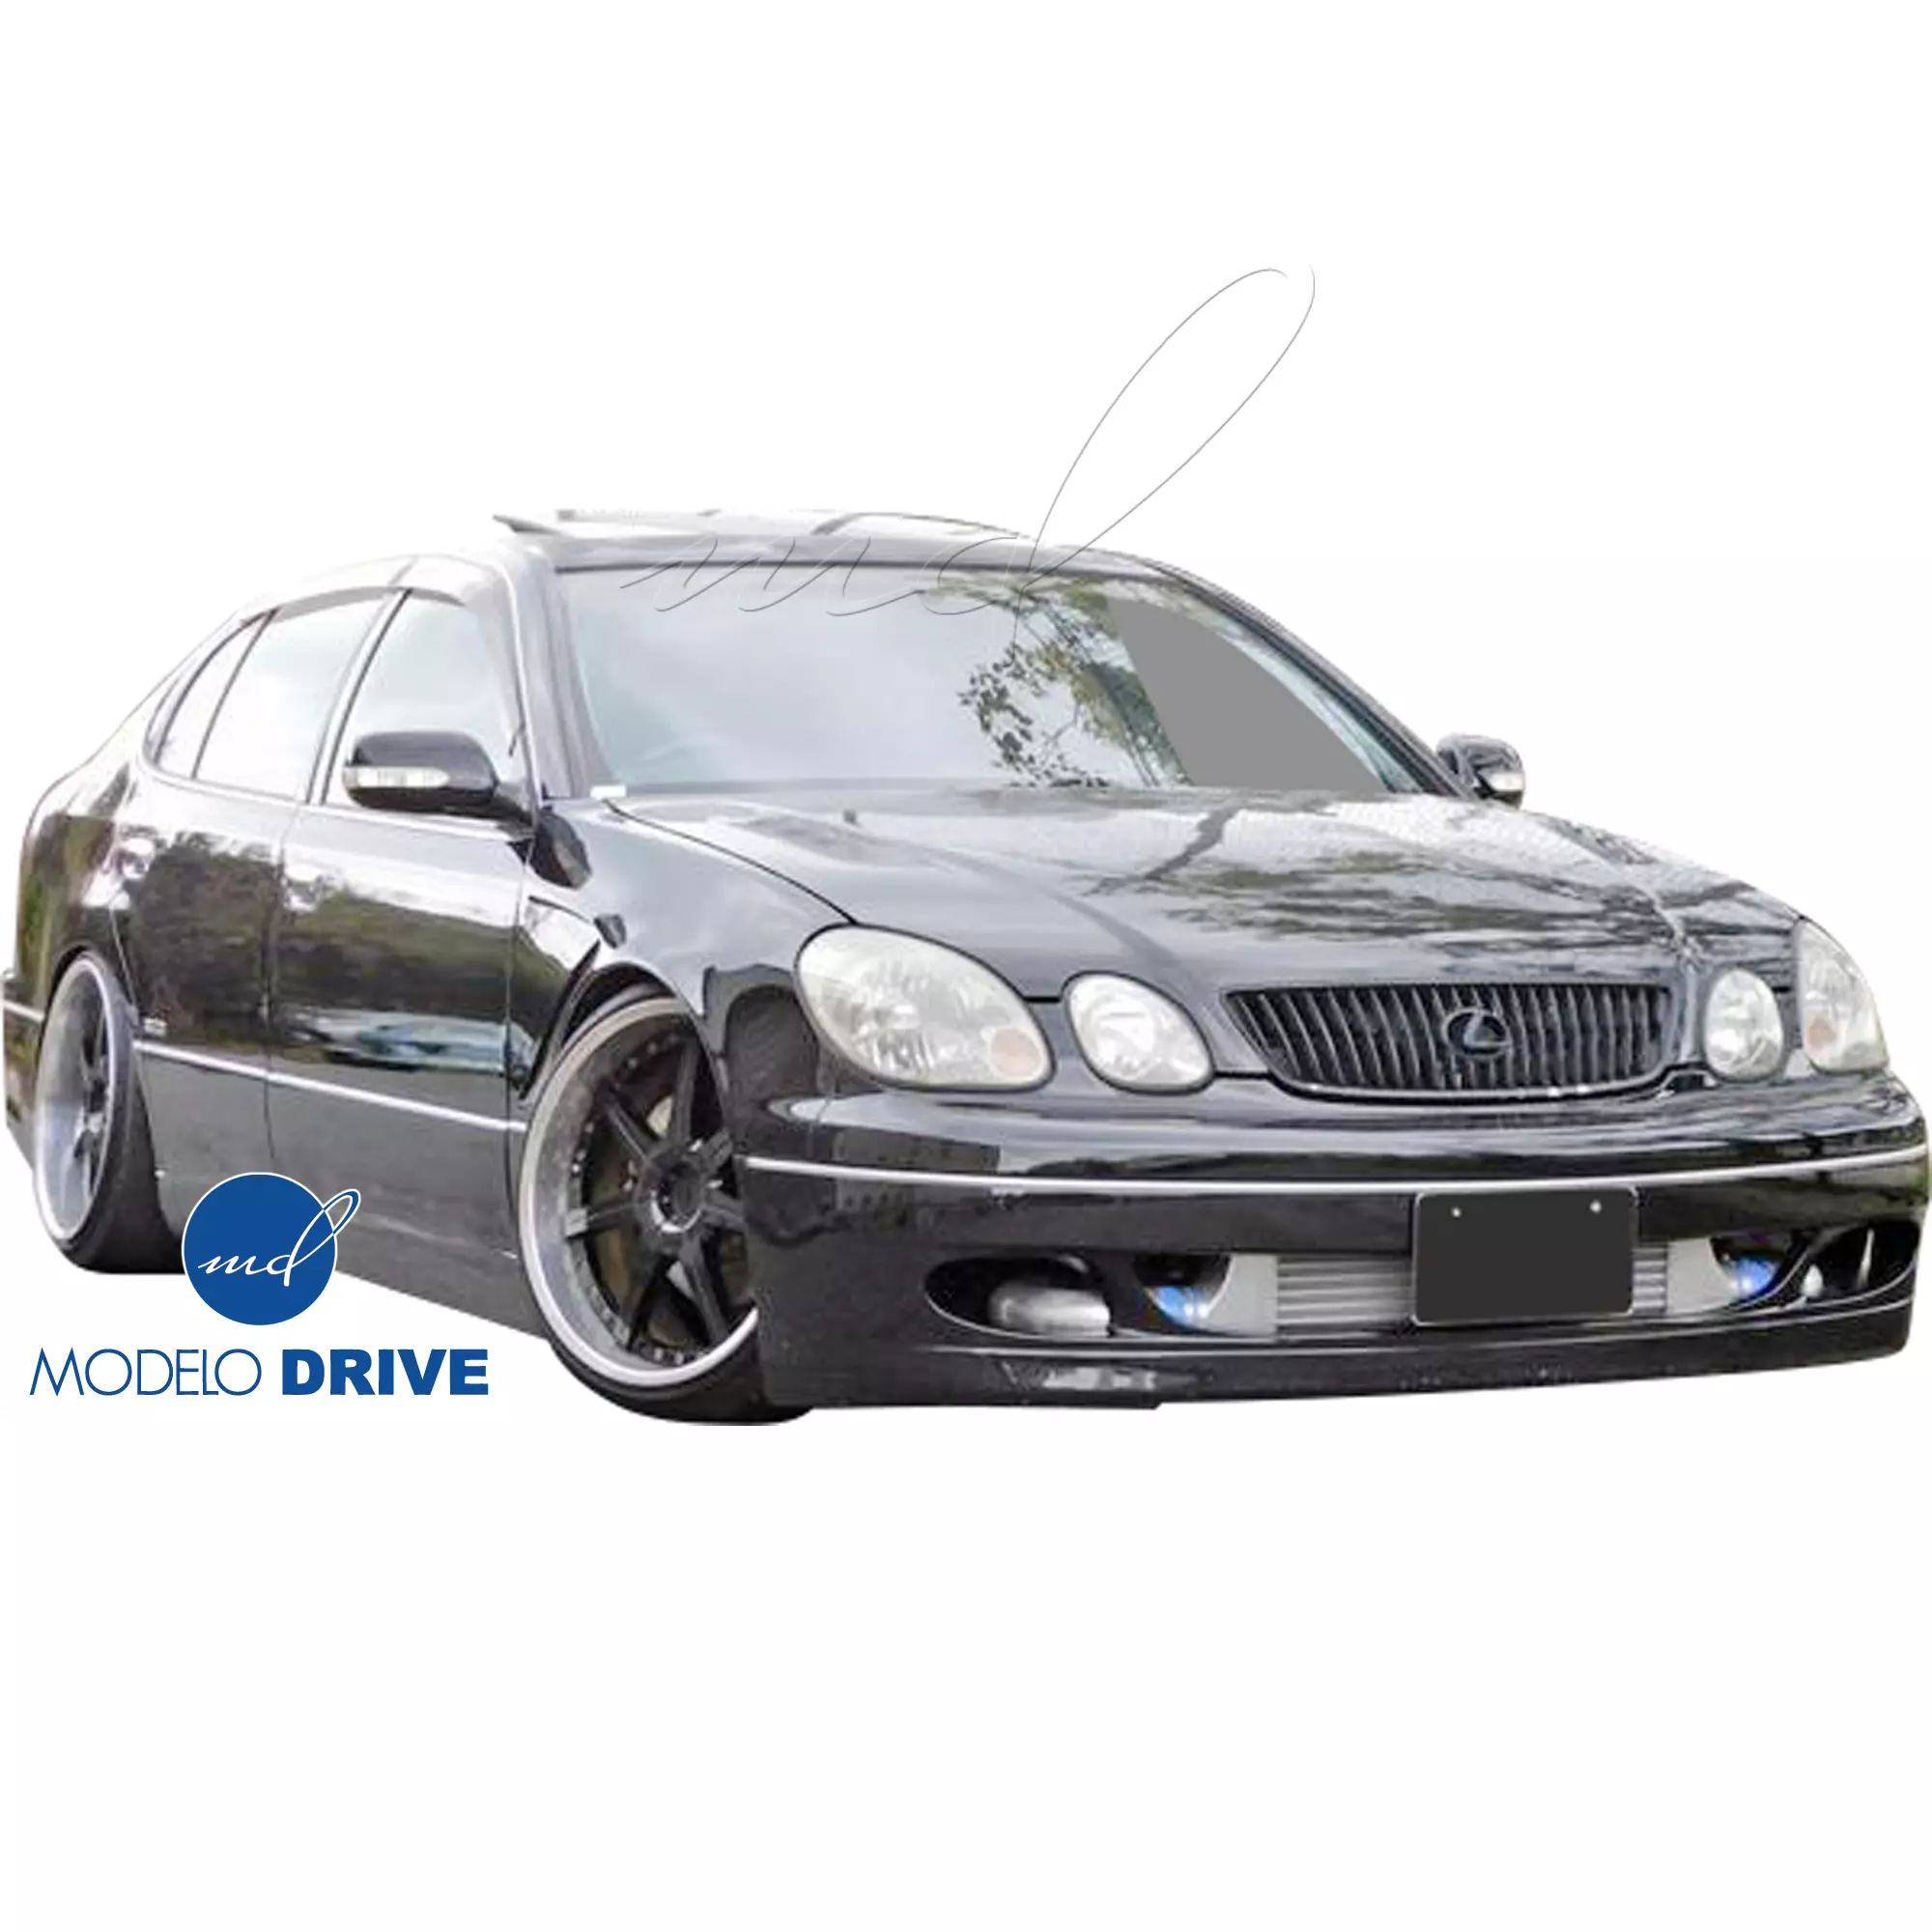 ModeloDrive FRP JUNT Body Kit 4pc > Lexus GS Series GS400 GS300 1998-2005 - Image 6